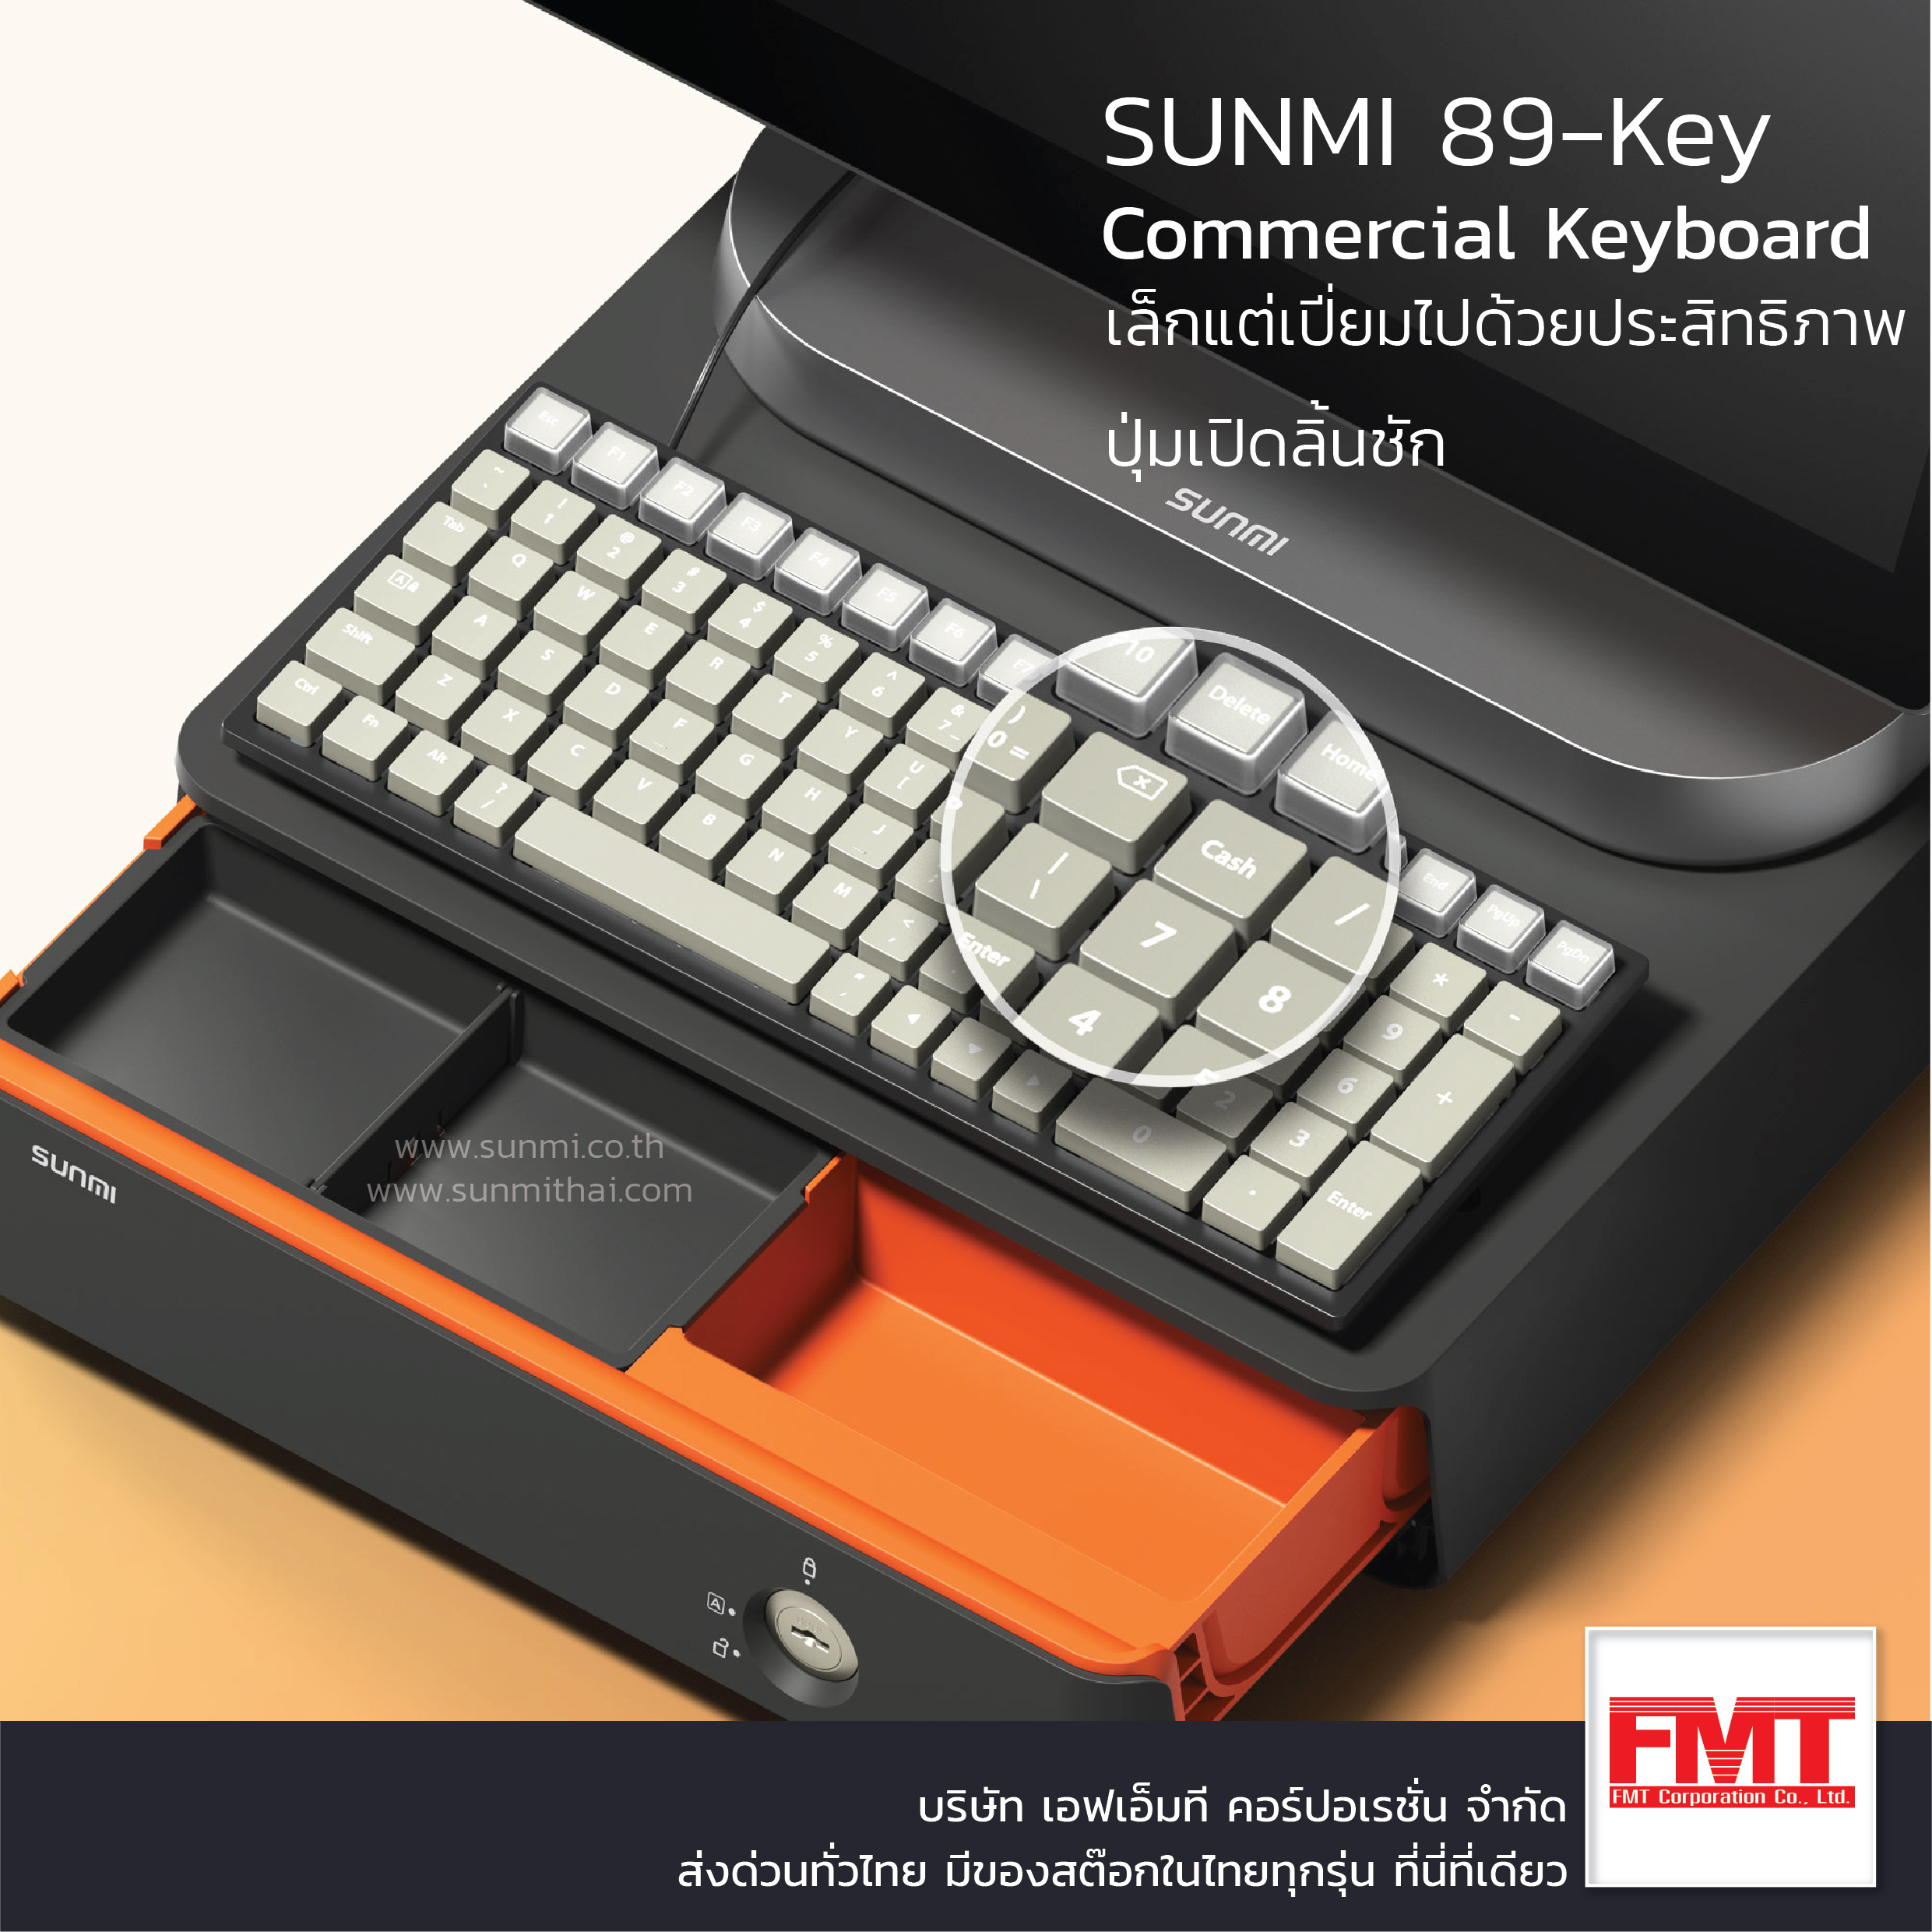 SUNMI 89 KEY Keyboard